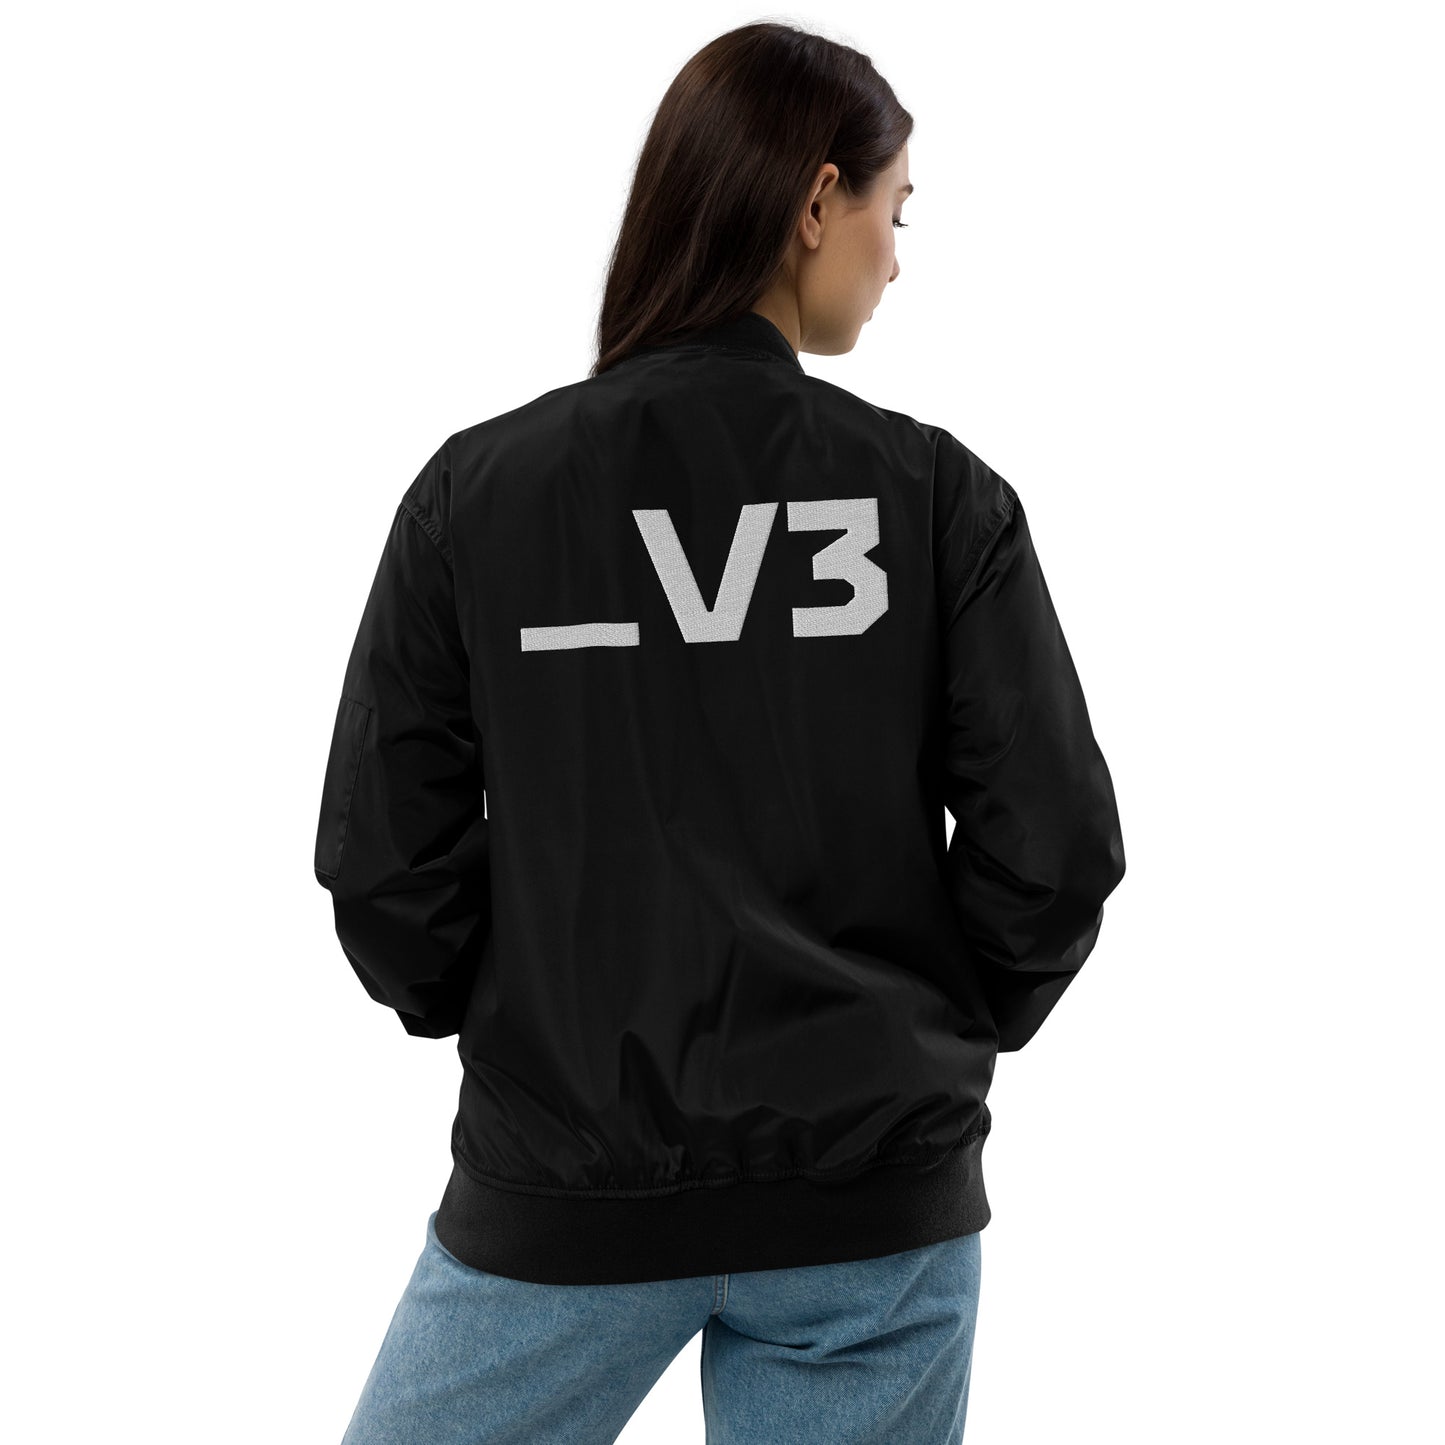 _V3 Embroidered Premium recycled bomber jacket